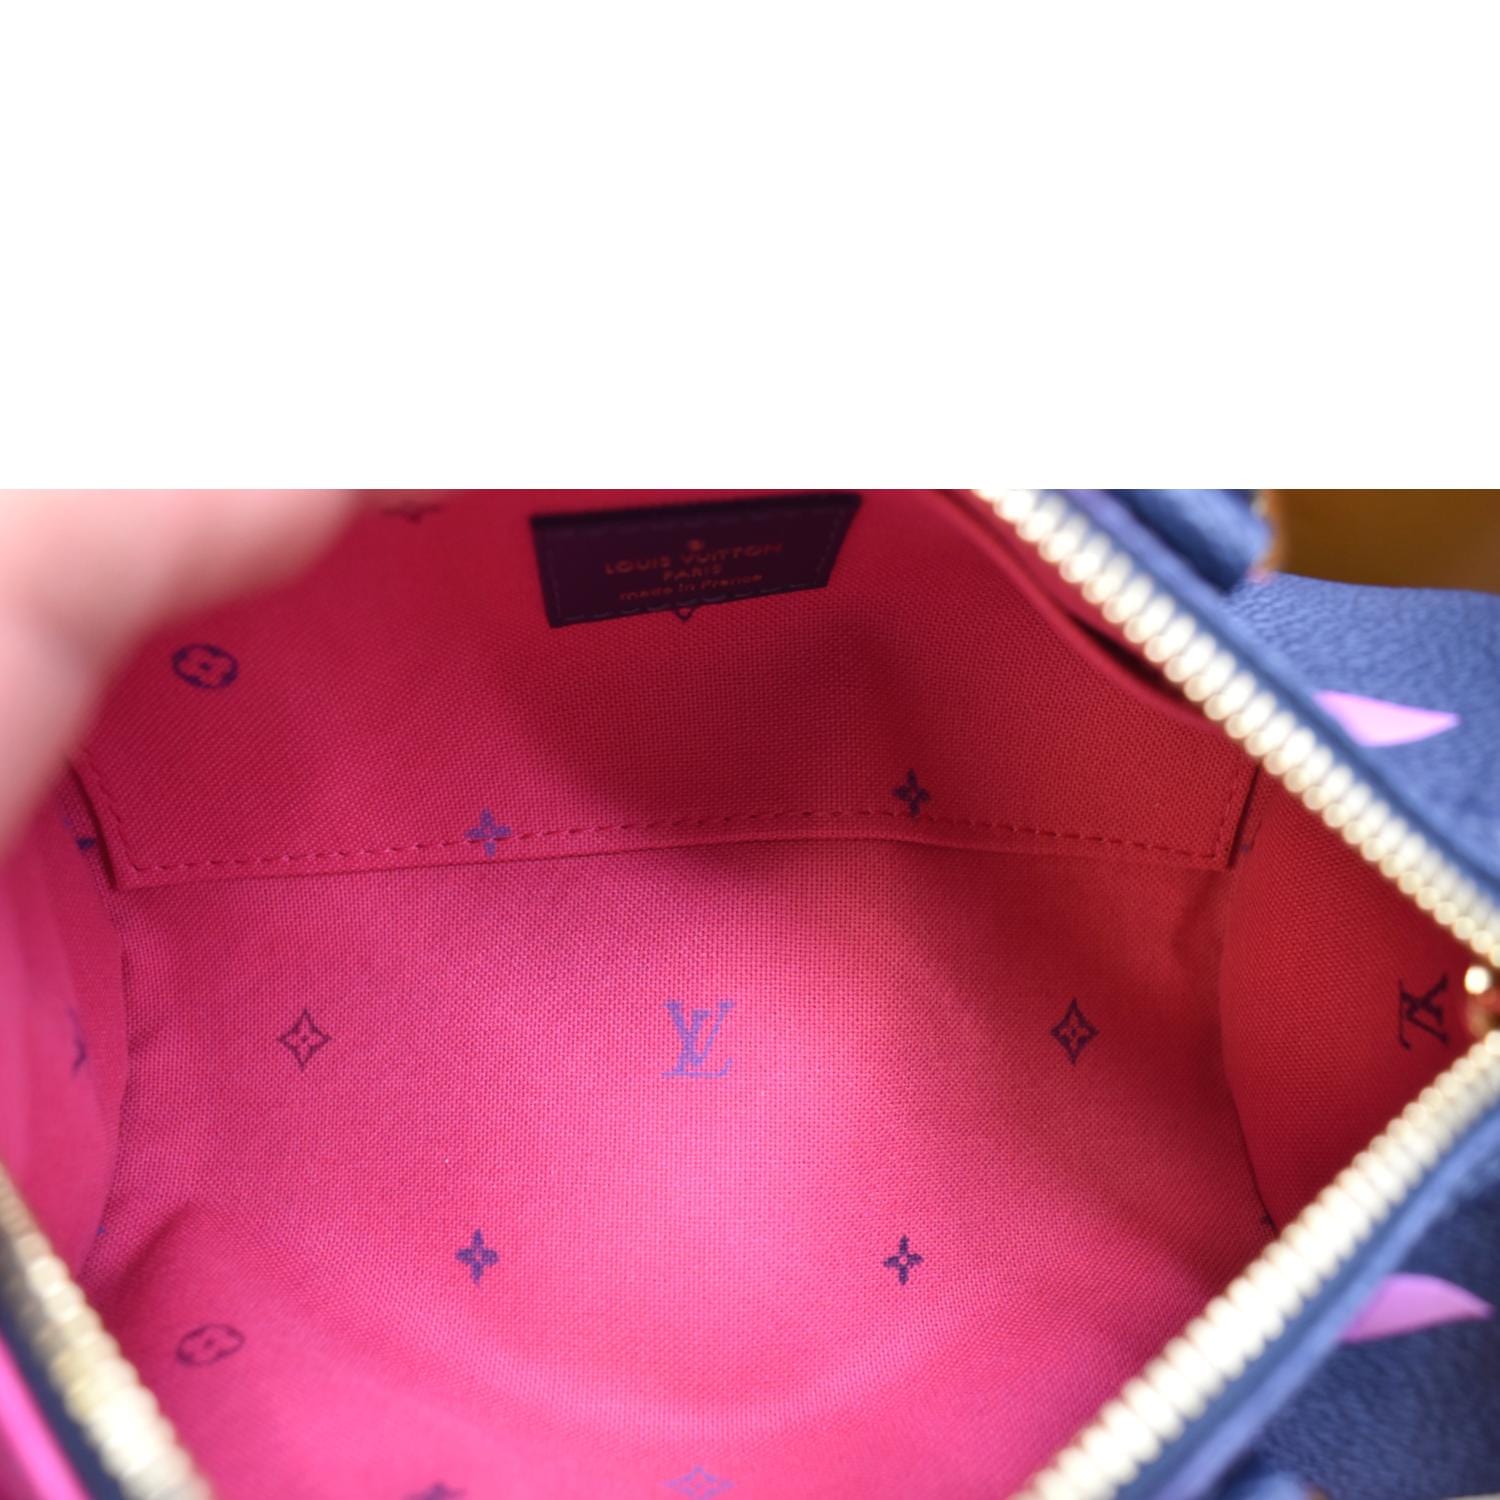 Papillon bb cloth handbag Louis Vuitton Brown in Cloth - 38834507